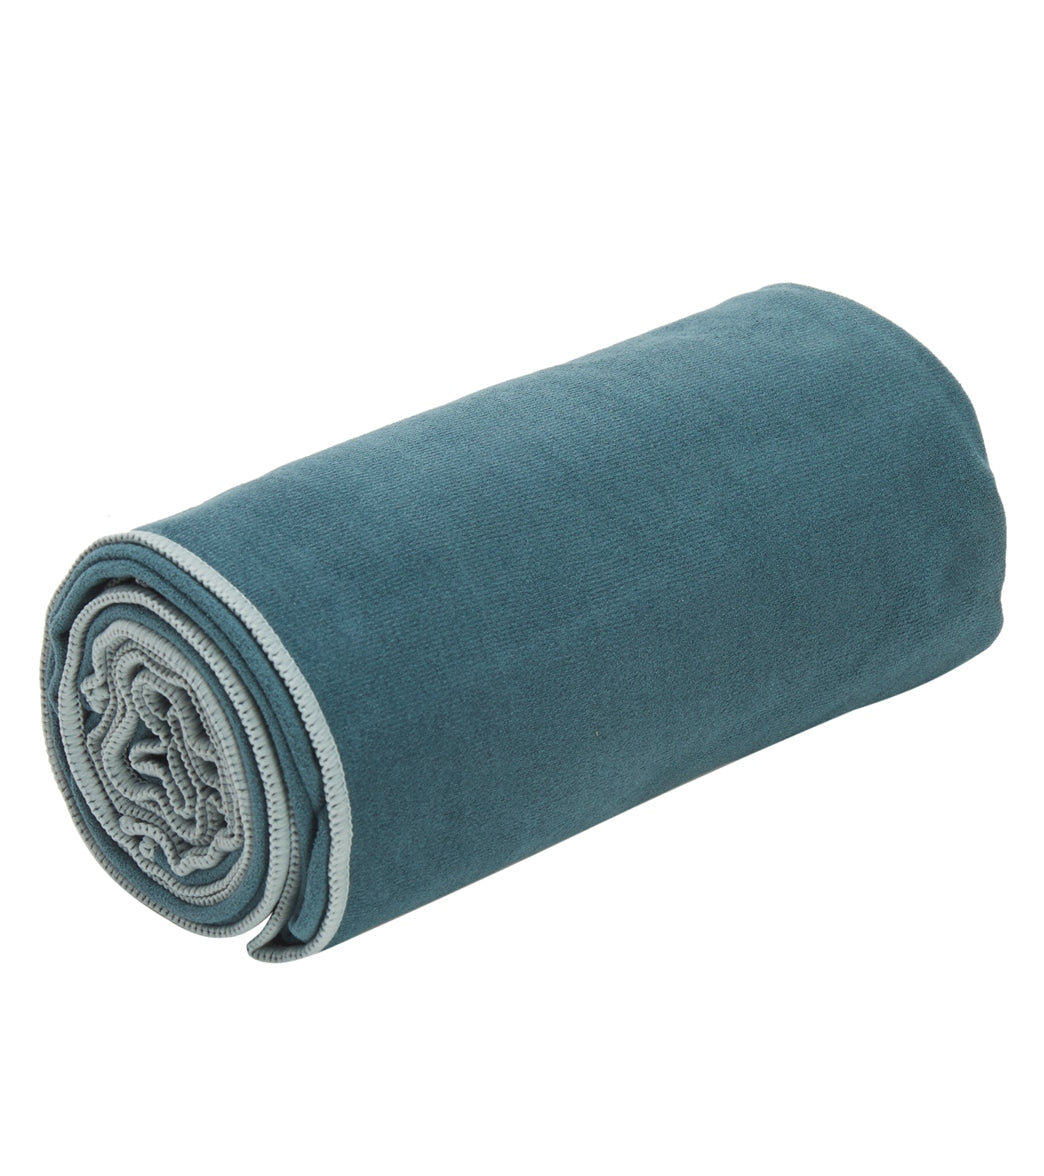 PPING Yoga Towel Hot Yoga Towel Non Slip Exercise Mat Towel Mat